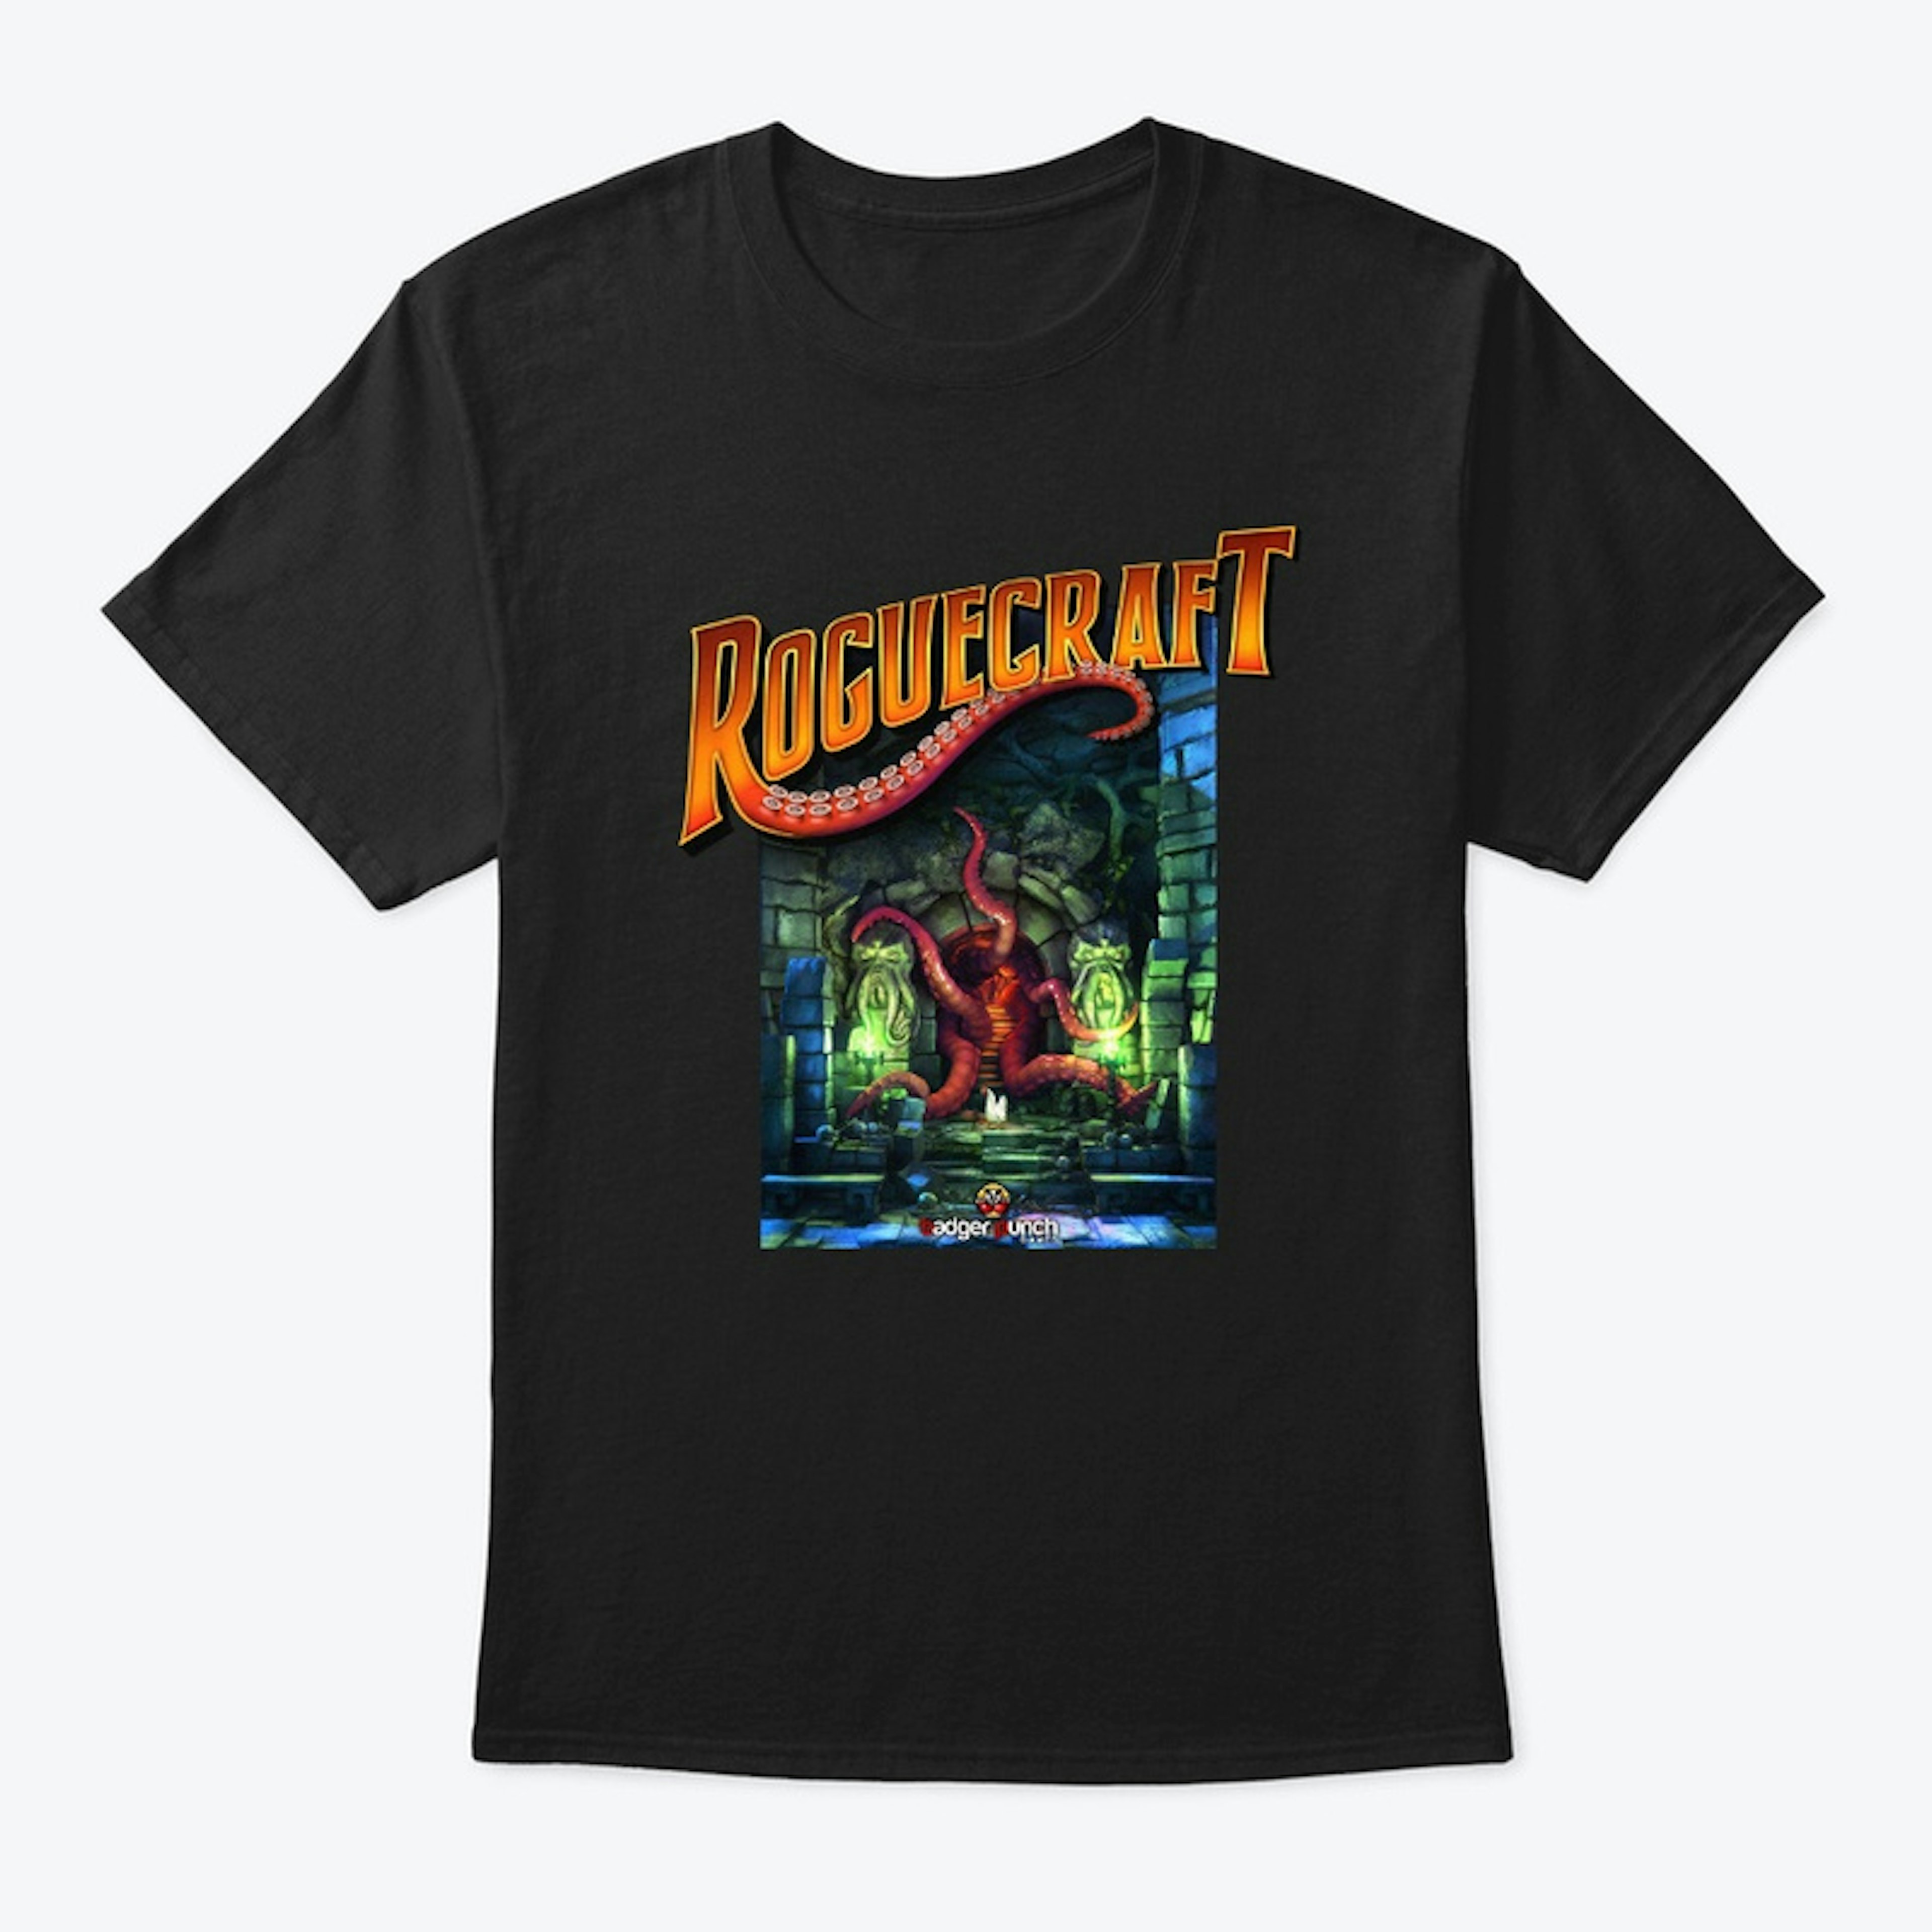 Roguecraft classic t-shirt